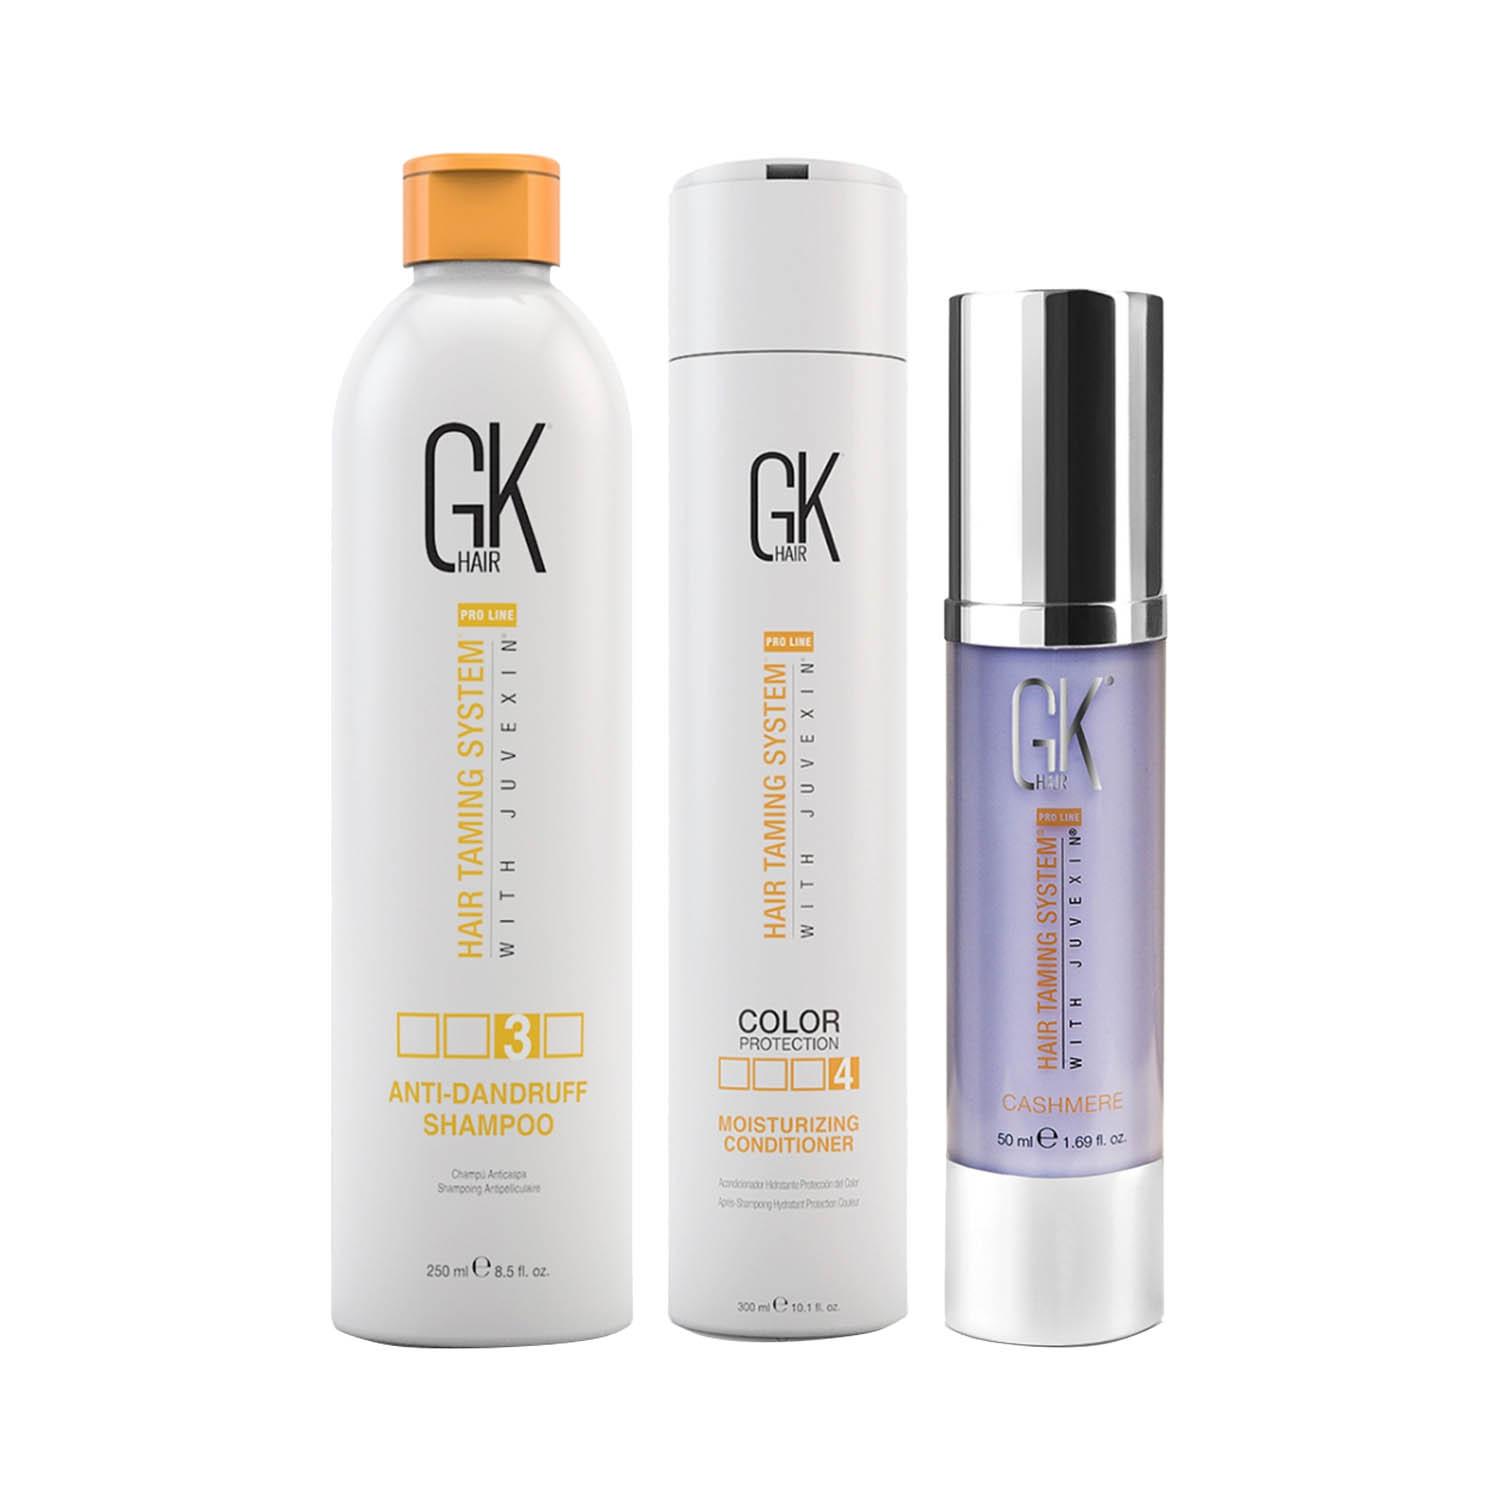 GK Hair Anti Dandruff Shampoo 250ml with Moisturizing Shampoo300ml and Cashmere 50ml